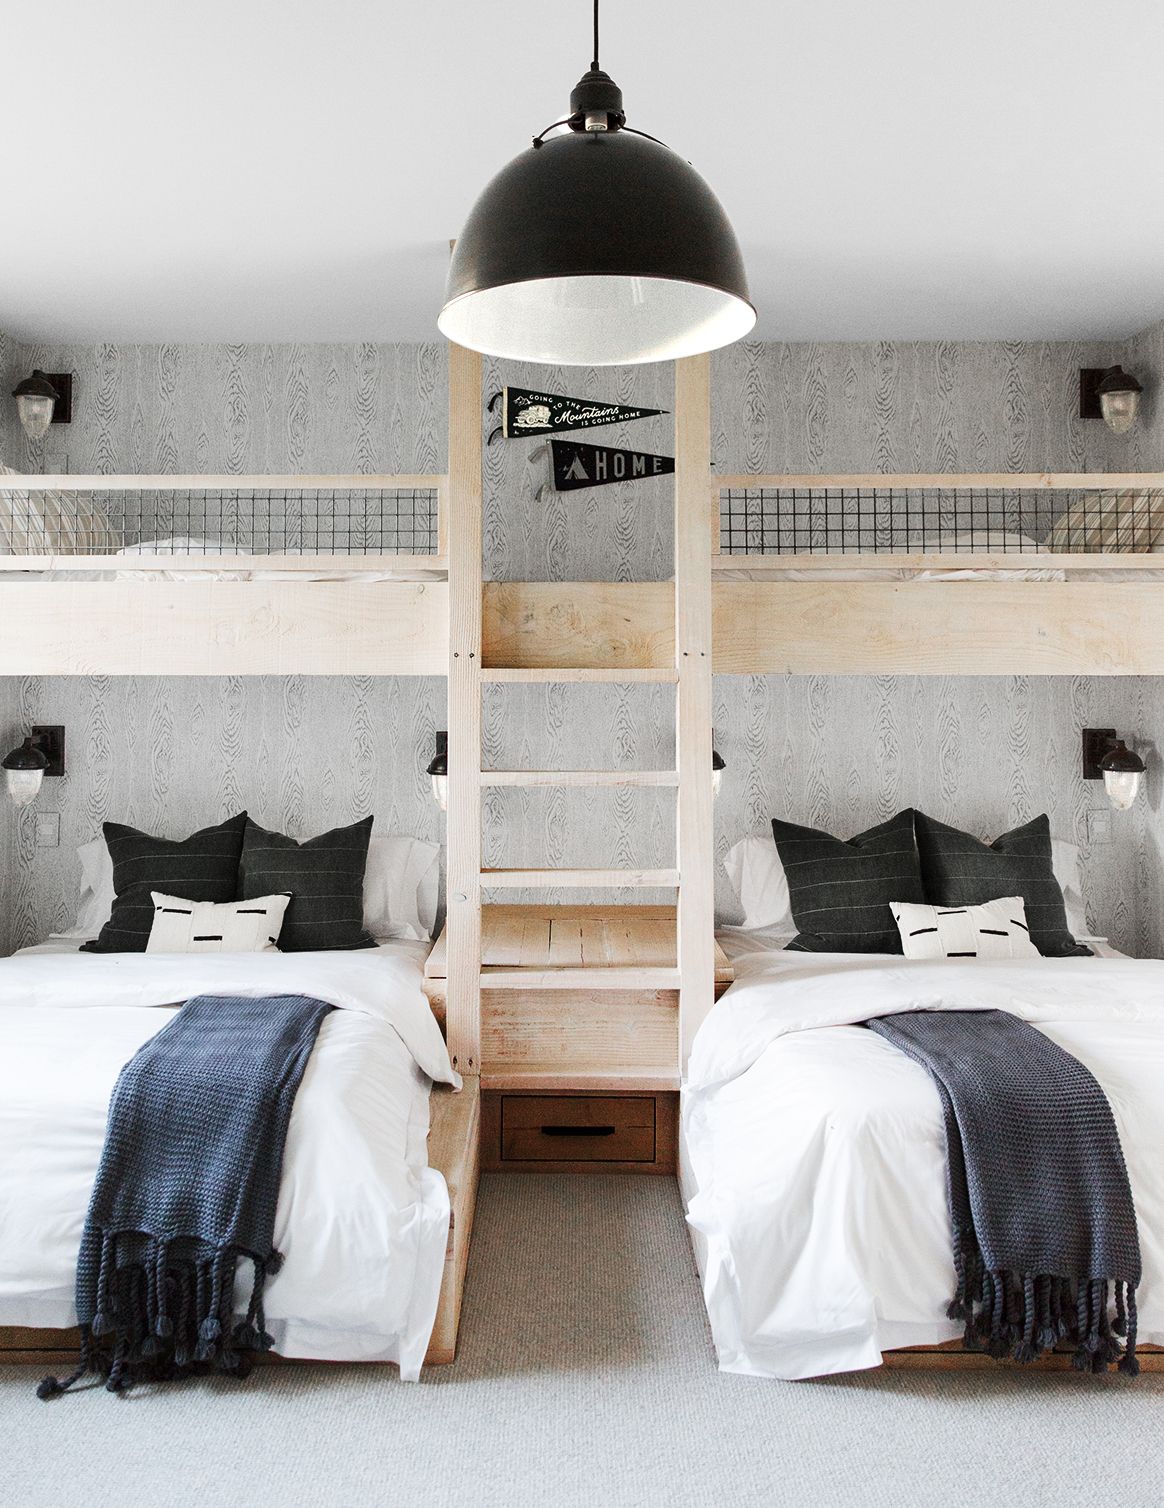 55 Kids Room Design Ideas Cool, Bunk Bed Decorating Ideas